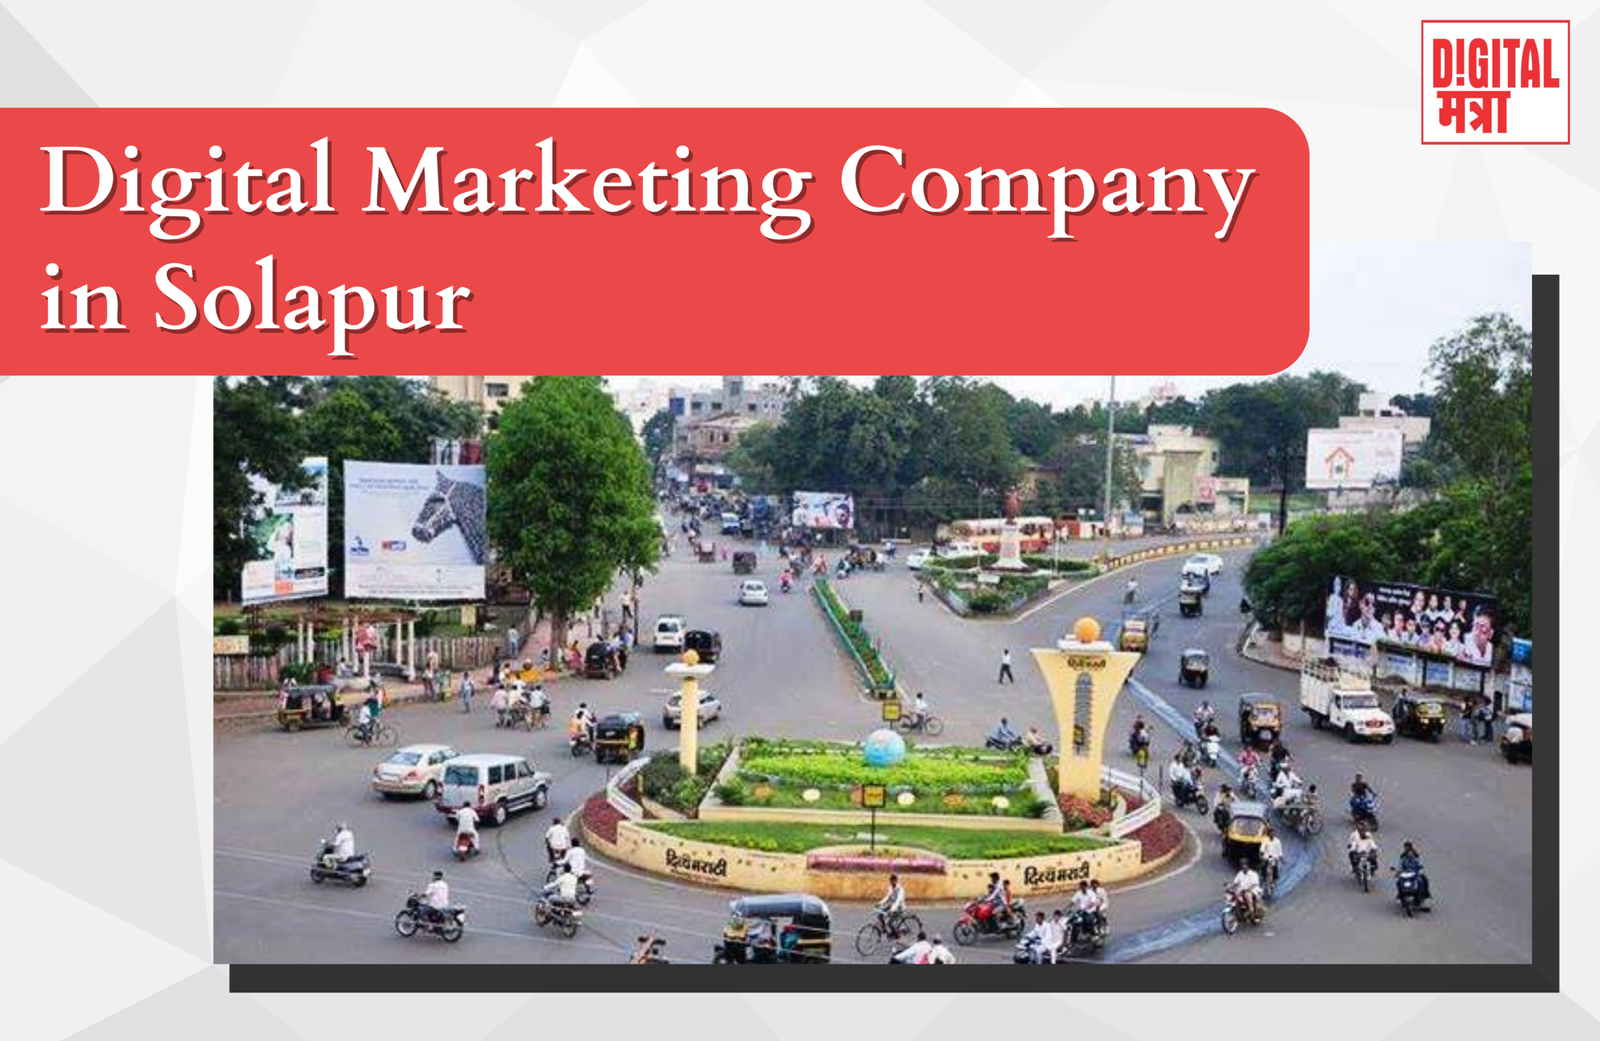 Digital Marketing Company in solapur 2